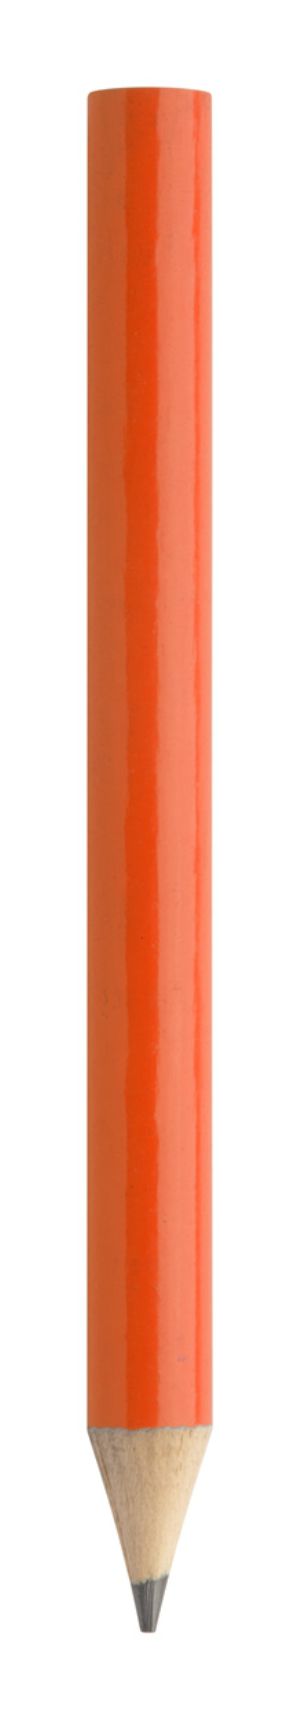 Mini ceruzka Mercia, oranžová